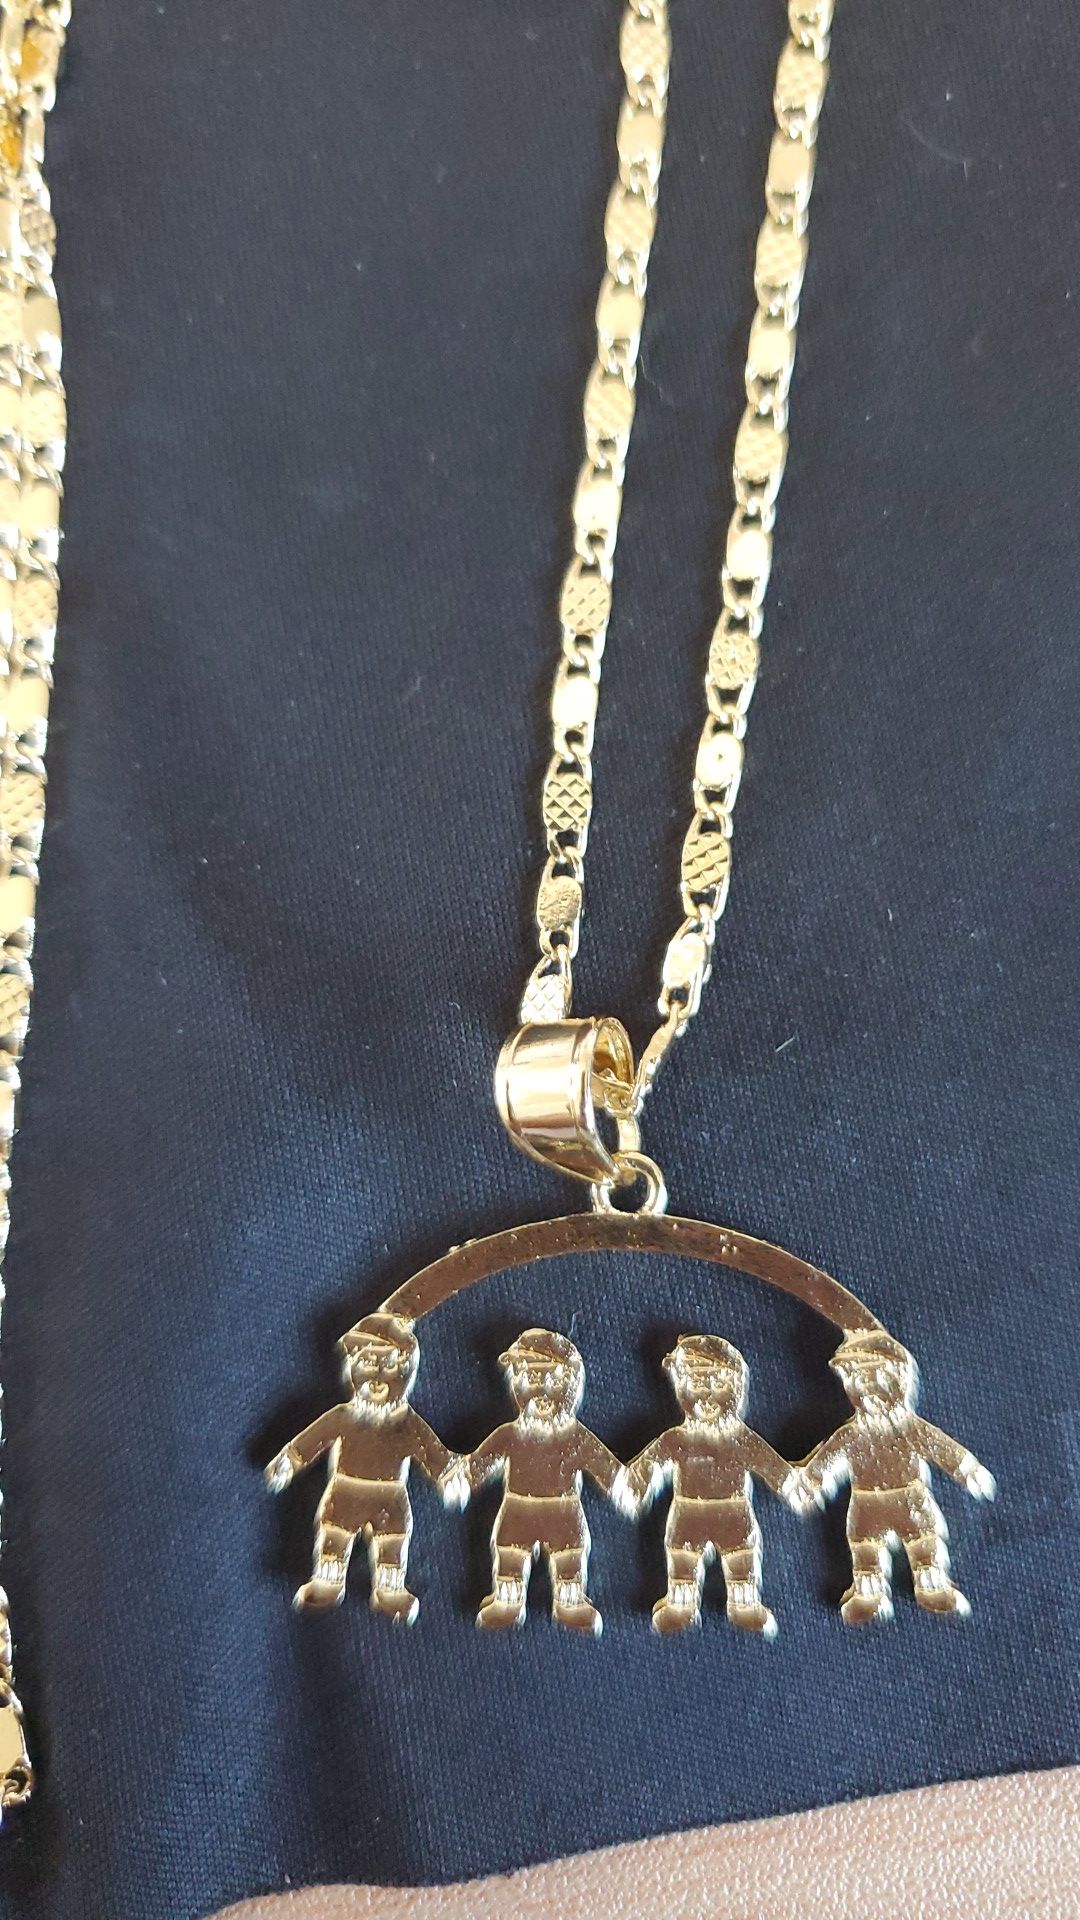 4 boys necklace